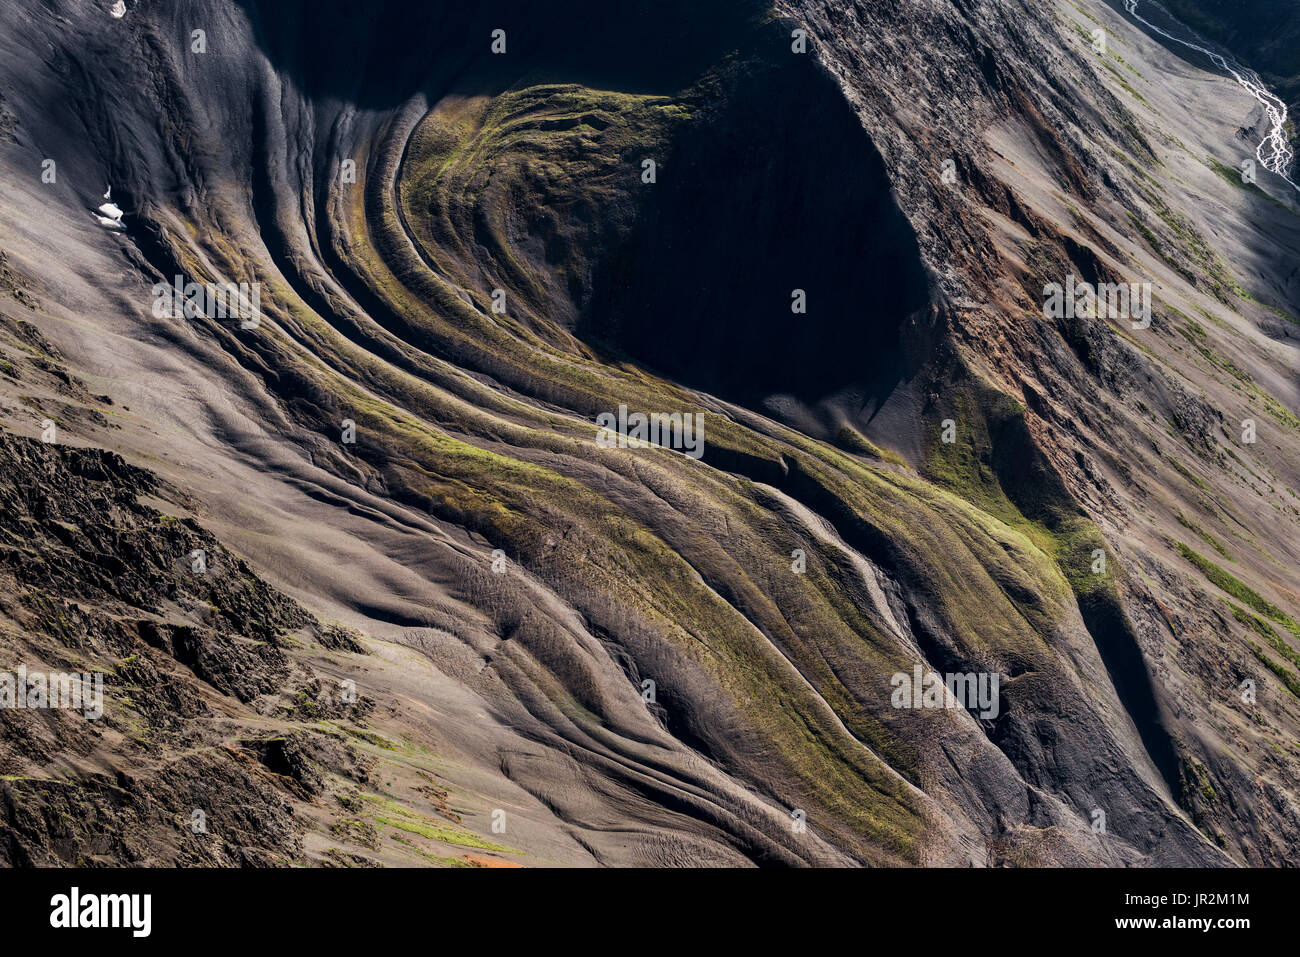 Aerial View Of A Rock Glacier In The Revelation Mountains Of The Alaska Range, Interior Alaska, USA Stock Photo